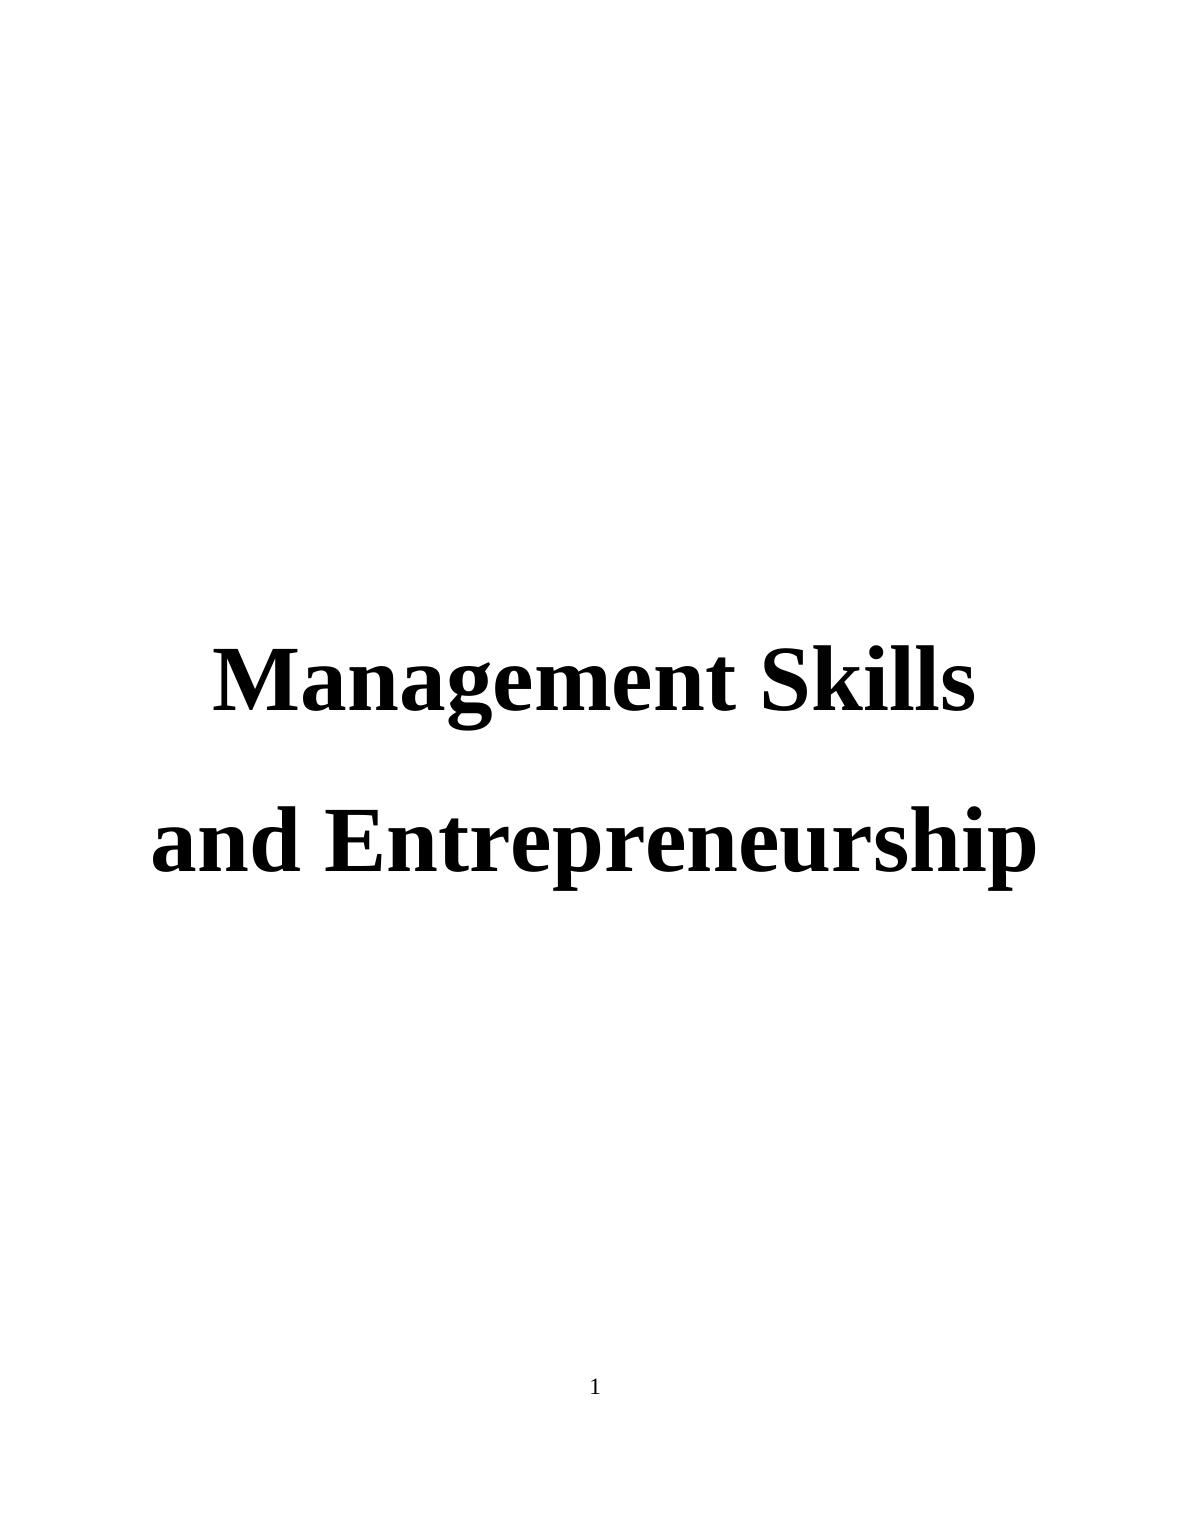 Management Skills and Entrepreneurship - Report_1